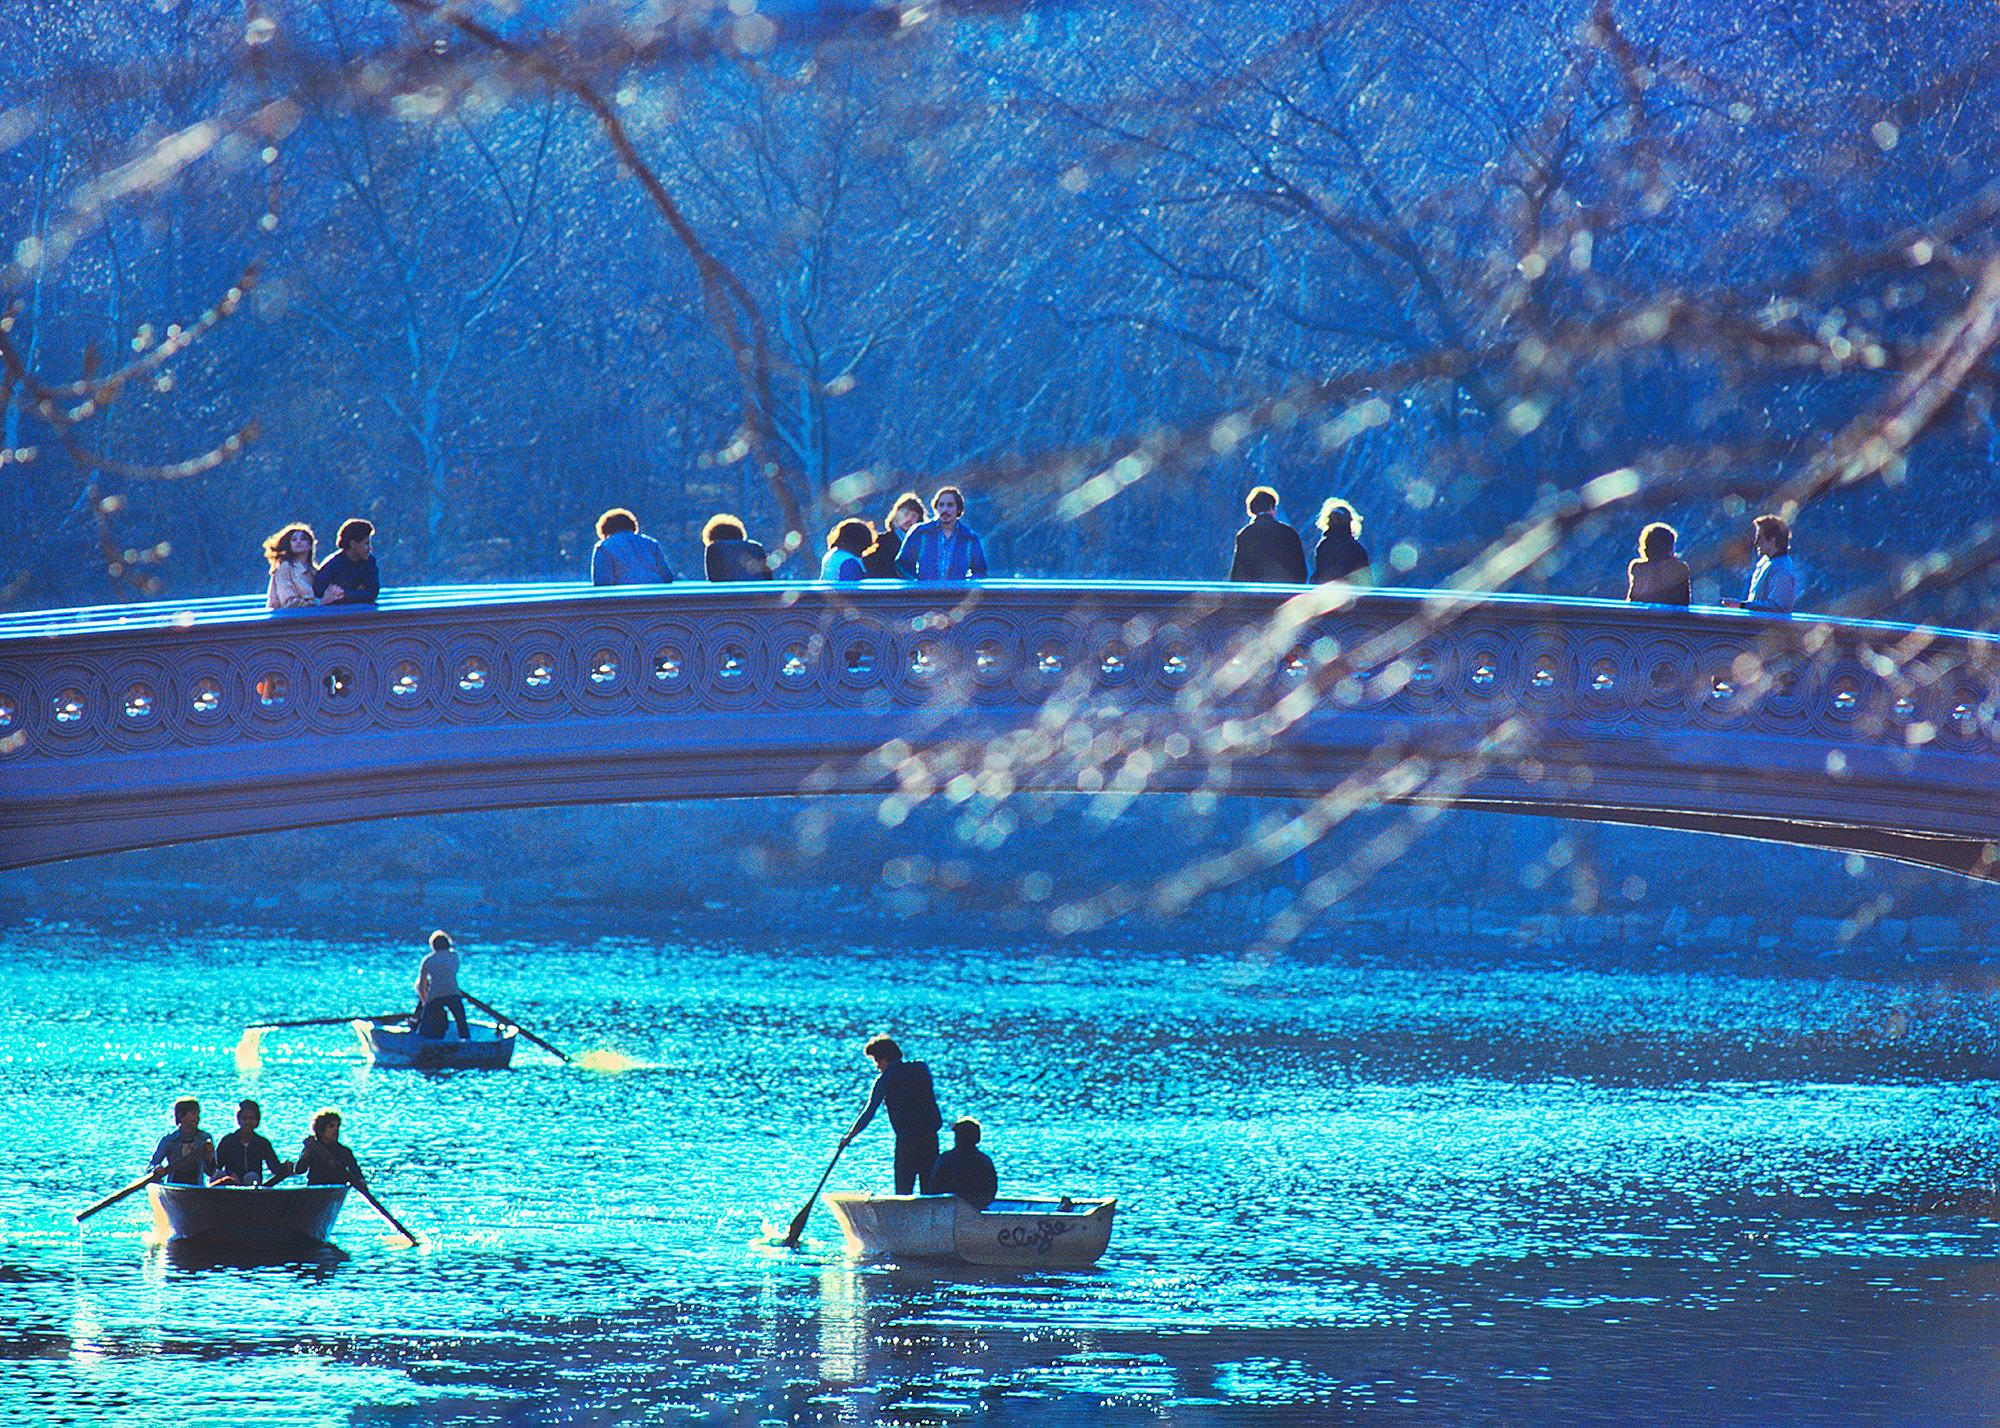 Mitchell Funk Landscape Photograph - Bow Bridge Row Boats in Central Park  - Cerulean Blue